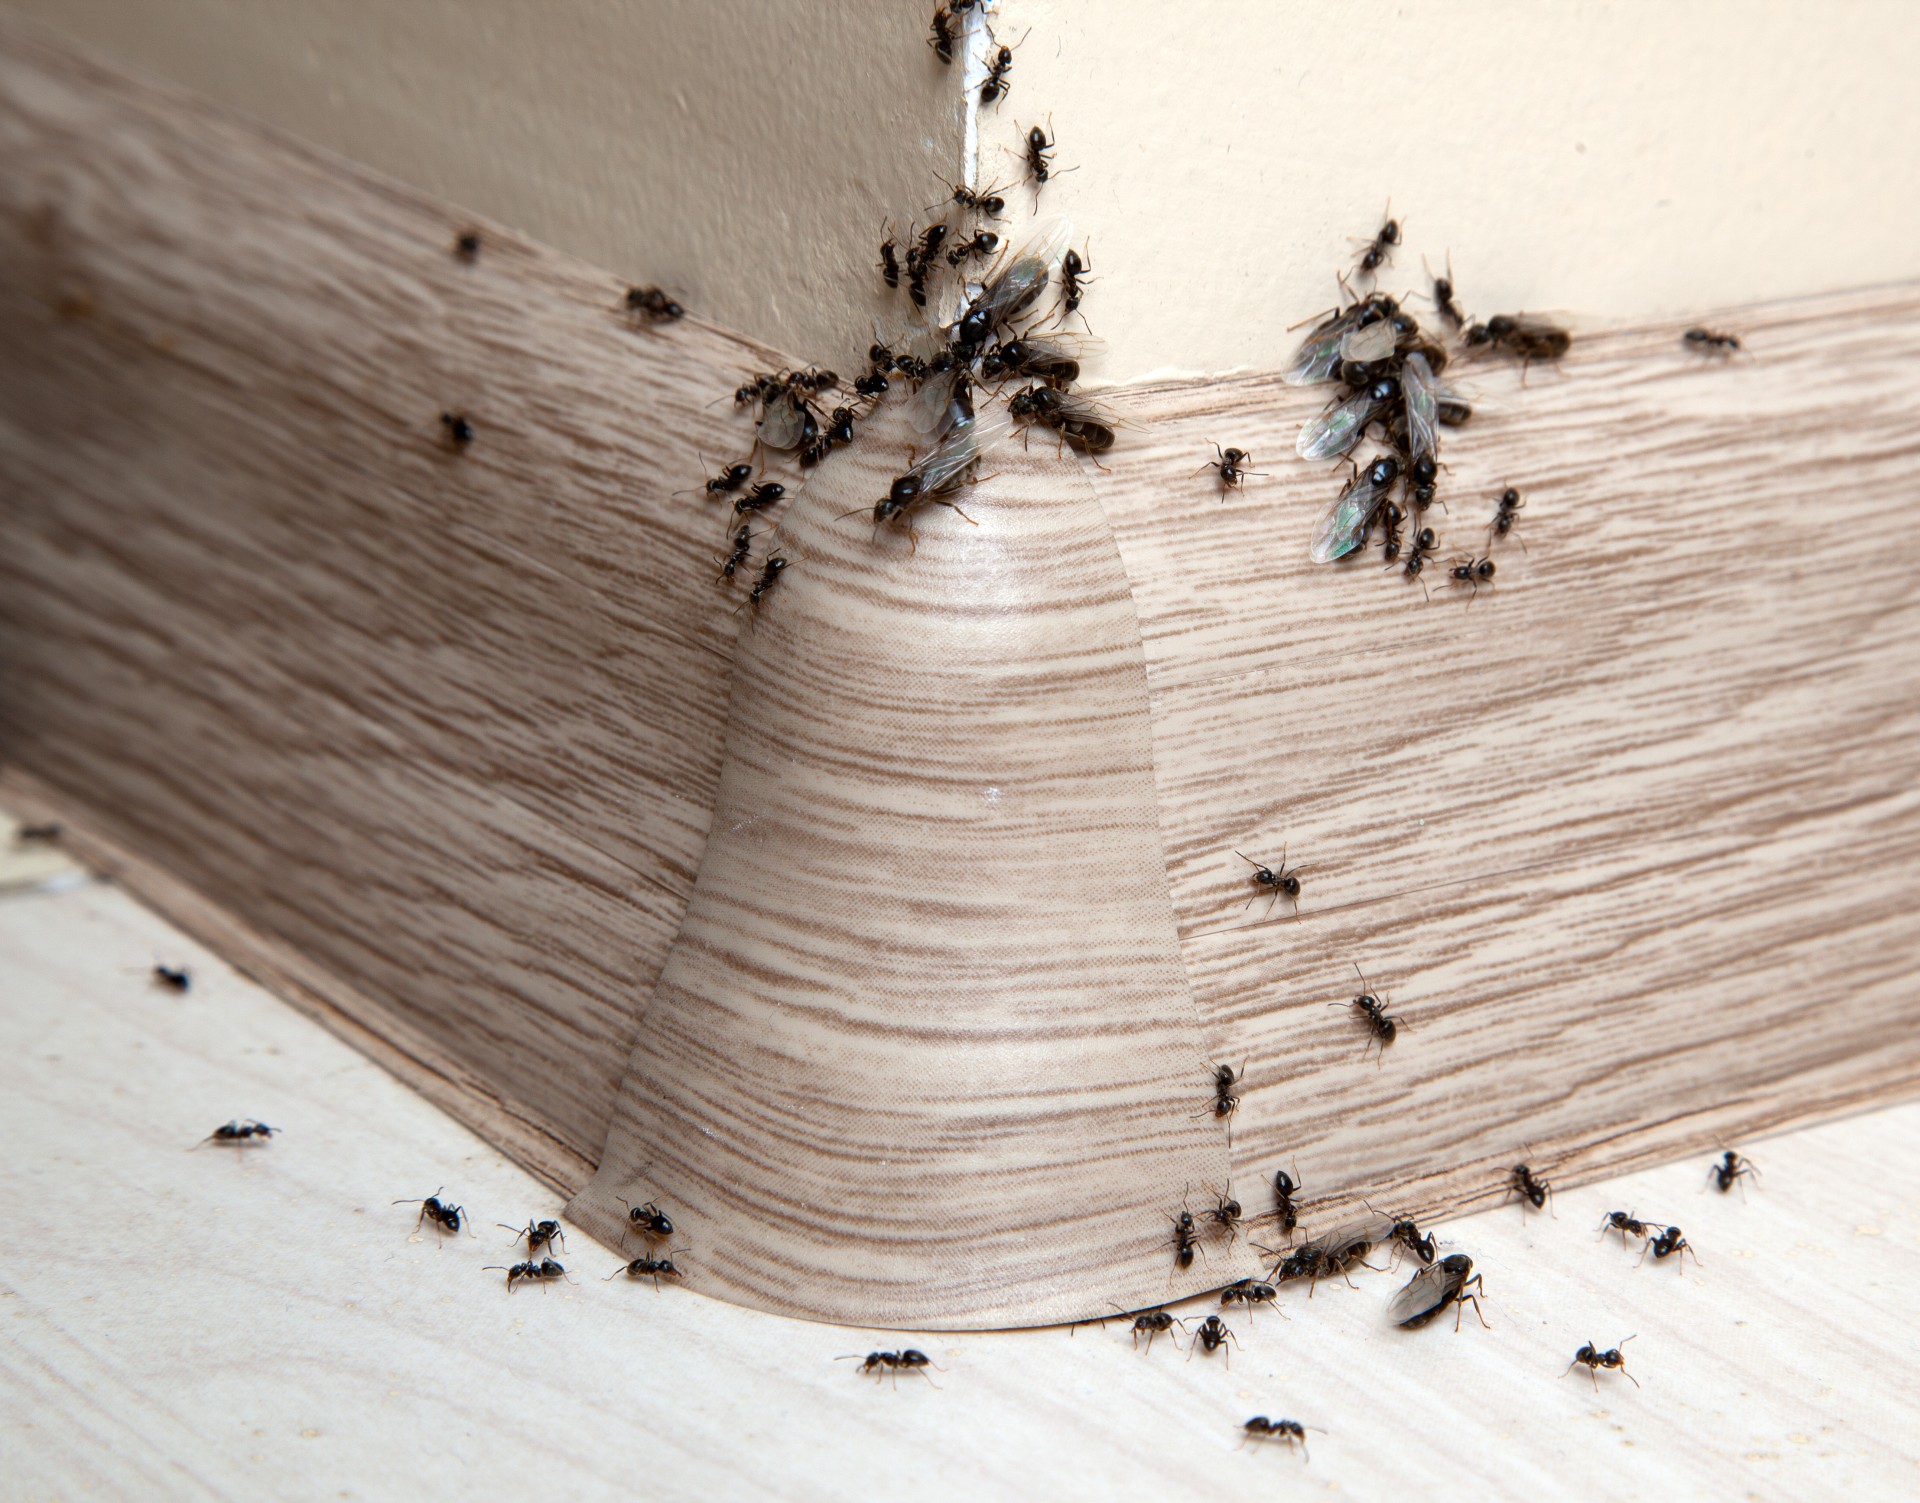 Ant Infestation, Pest Control in Barnes, Castelnau, SW13. Call Now 020 8166 9746